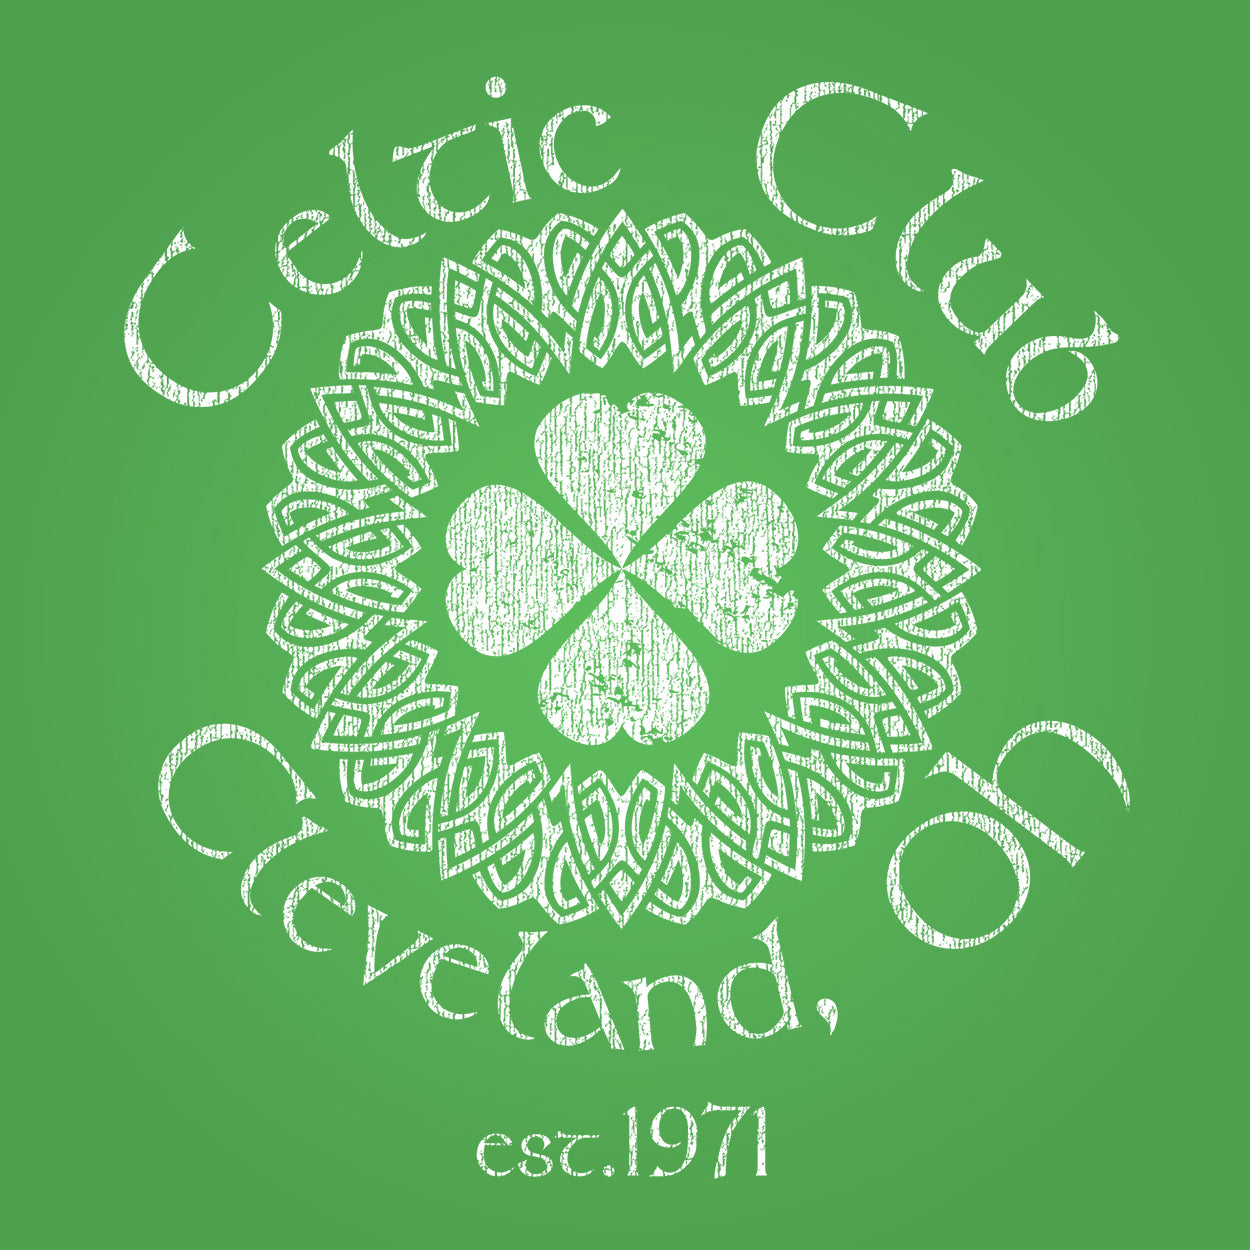 Celtic FC Crest Fleece Blanket 